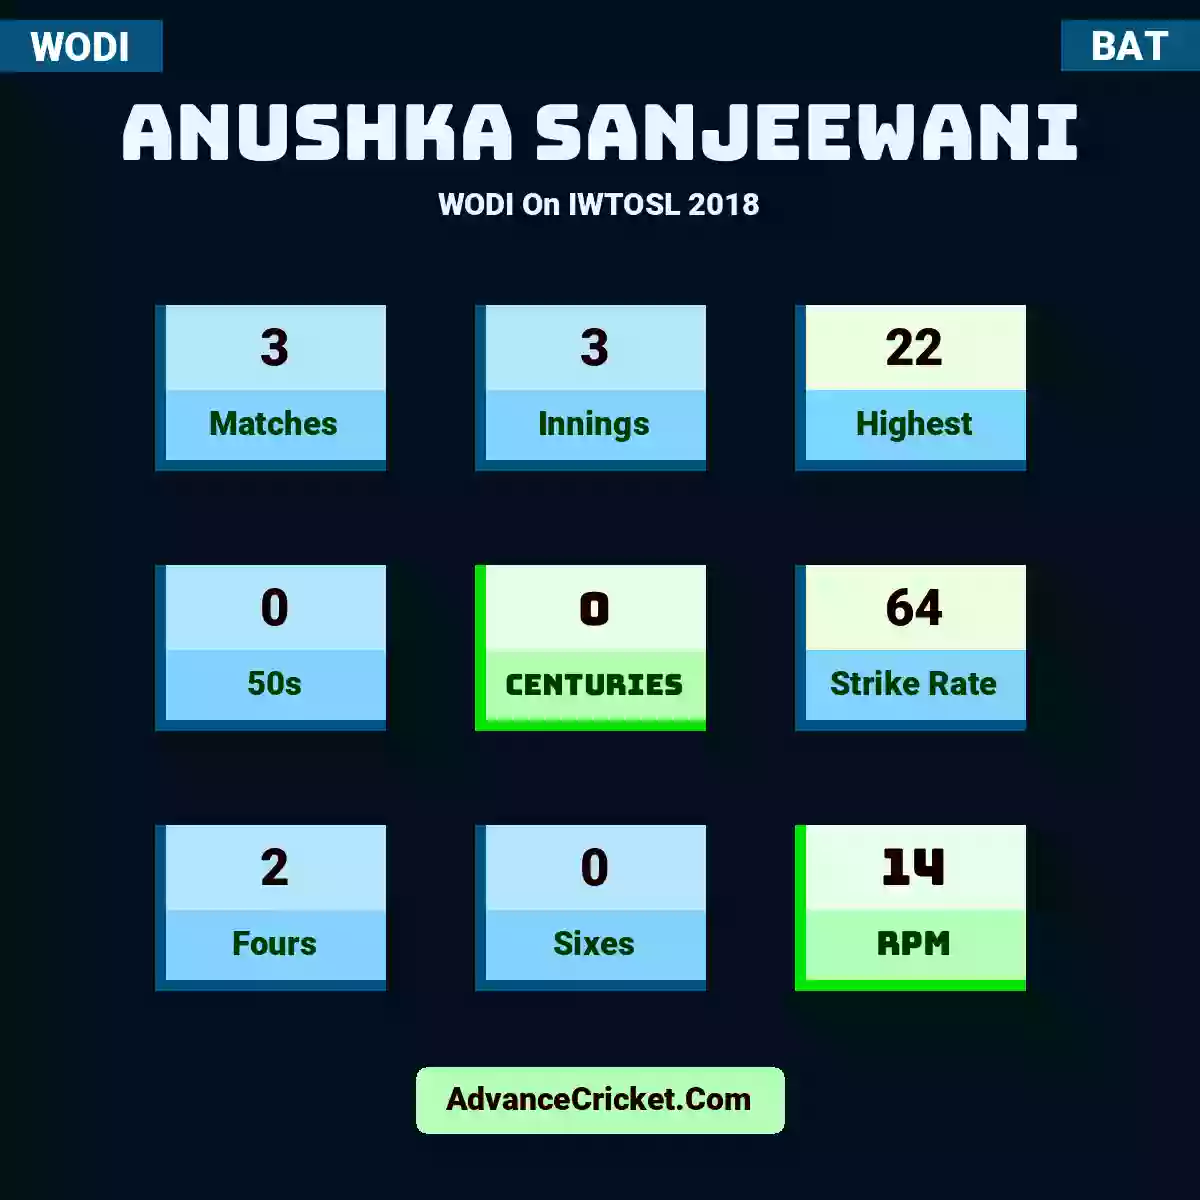 Anushka Sanjeewani WODI  On IWTOSL 2018, Anushka Sanjeewani played 3 matches, scored 22 runs as highest, 0 half-centuries, and 0 centuries, with a strike rate of 64. A.Sanjeewani hit 2 fours and 0 sixes, with an RPM of 14.